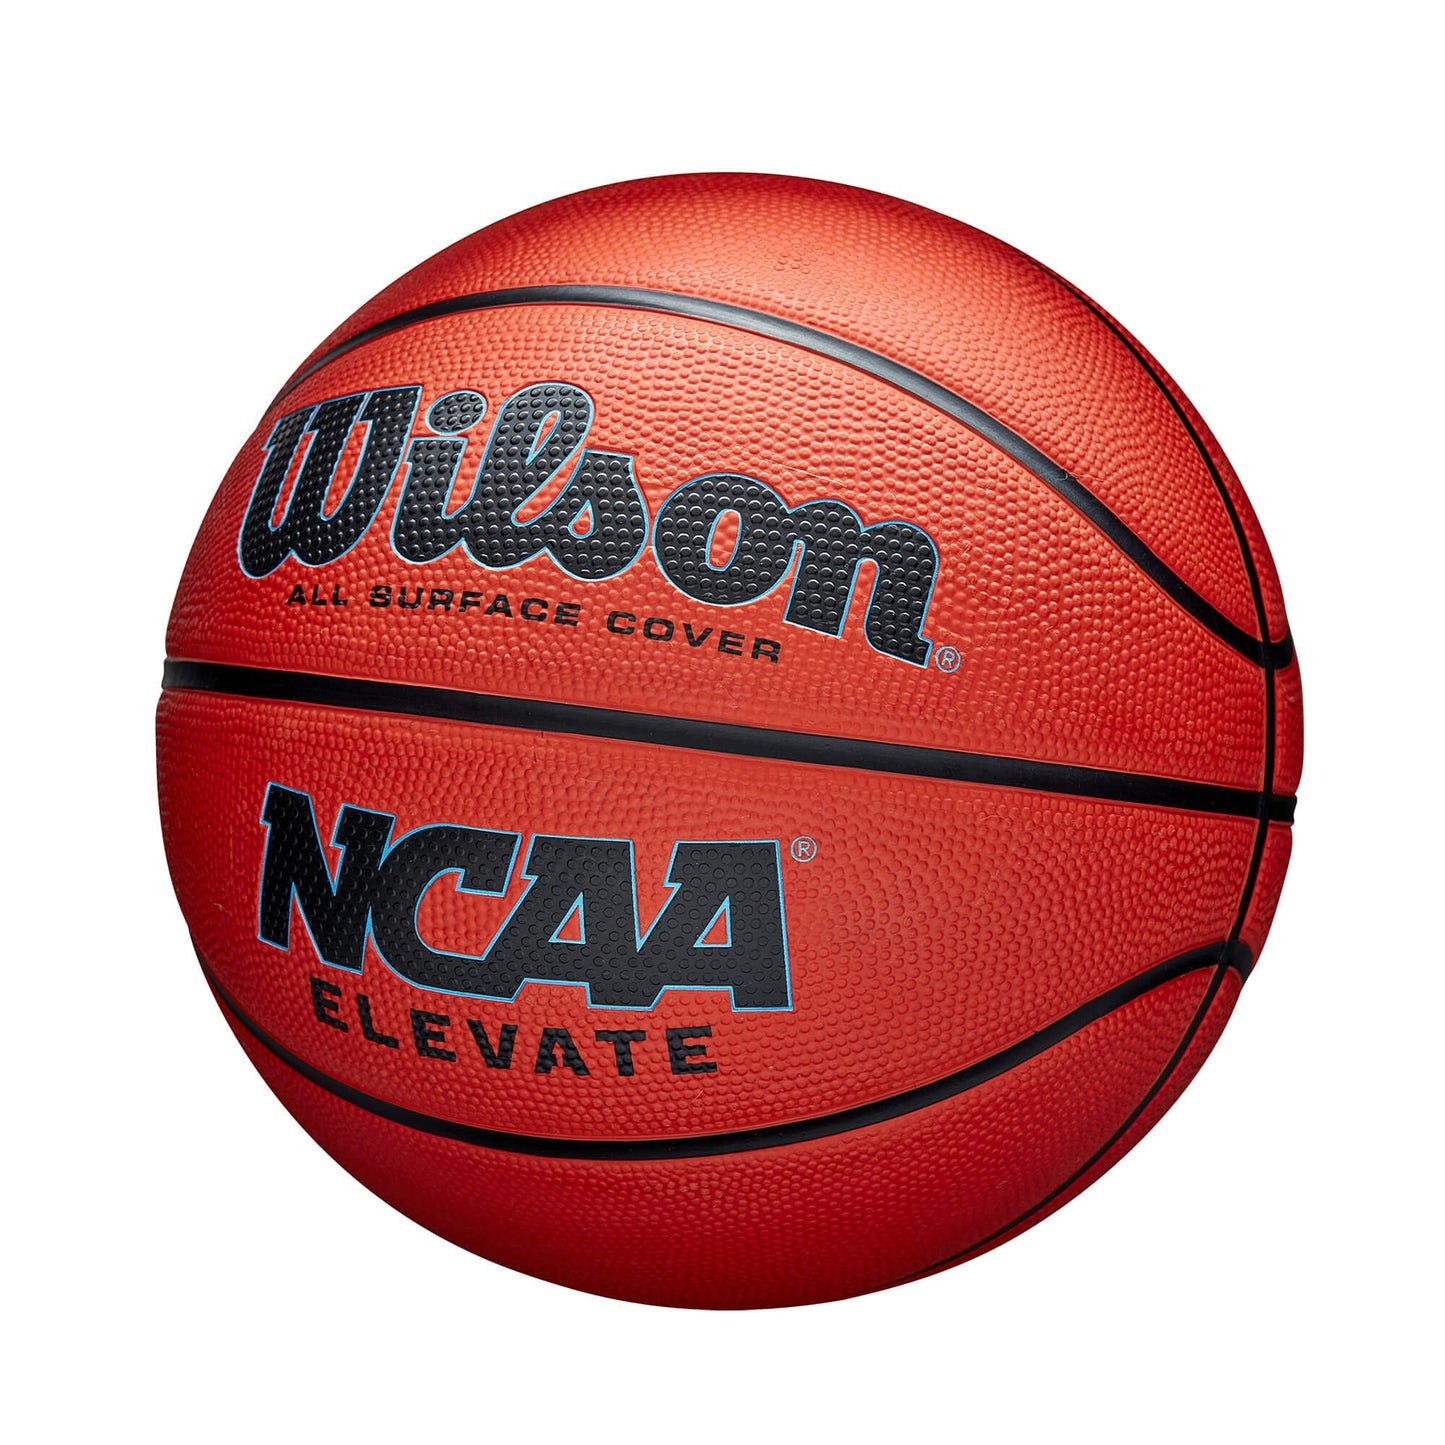 Wilson NCAA ELEVATE BSKT Orange/Black (sz. 6)